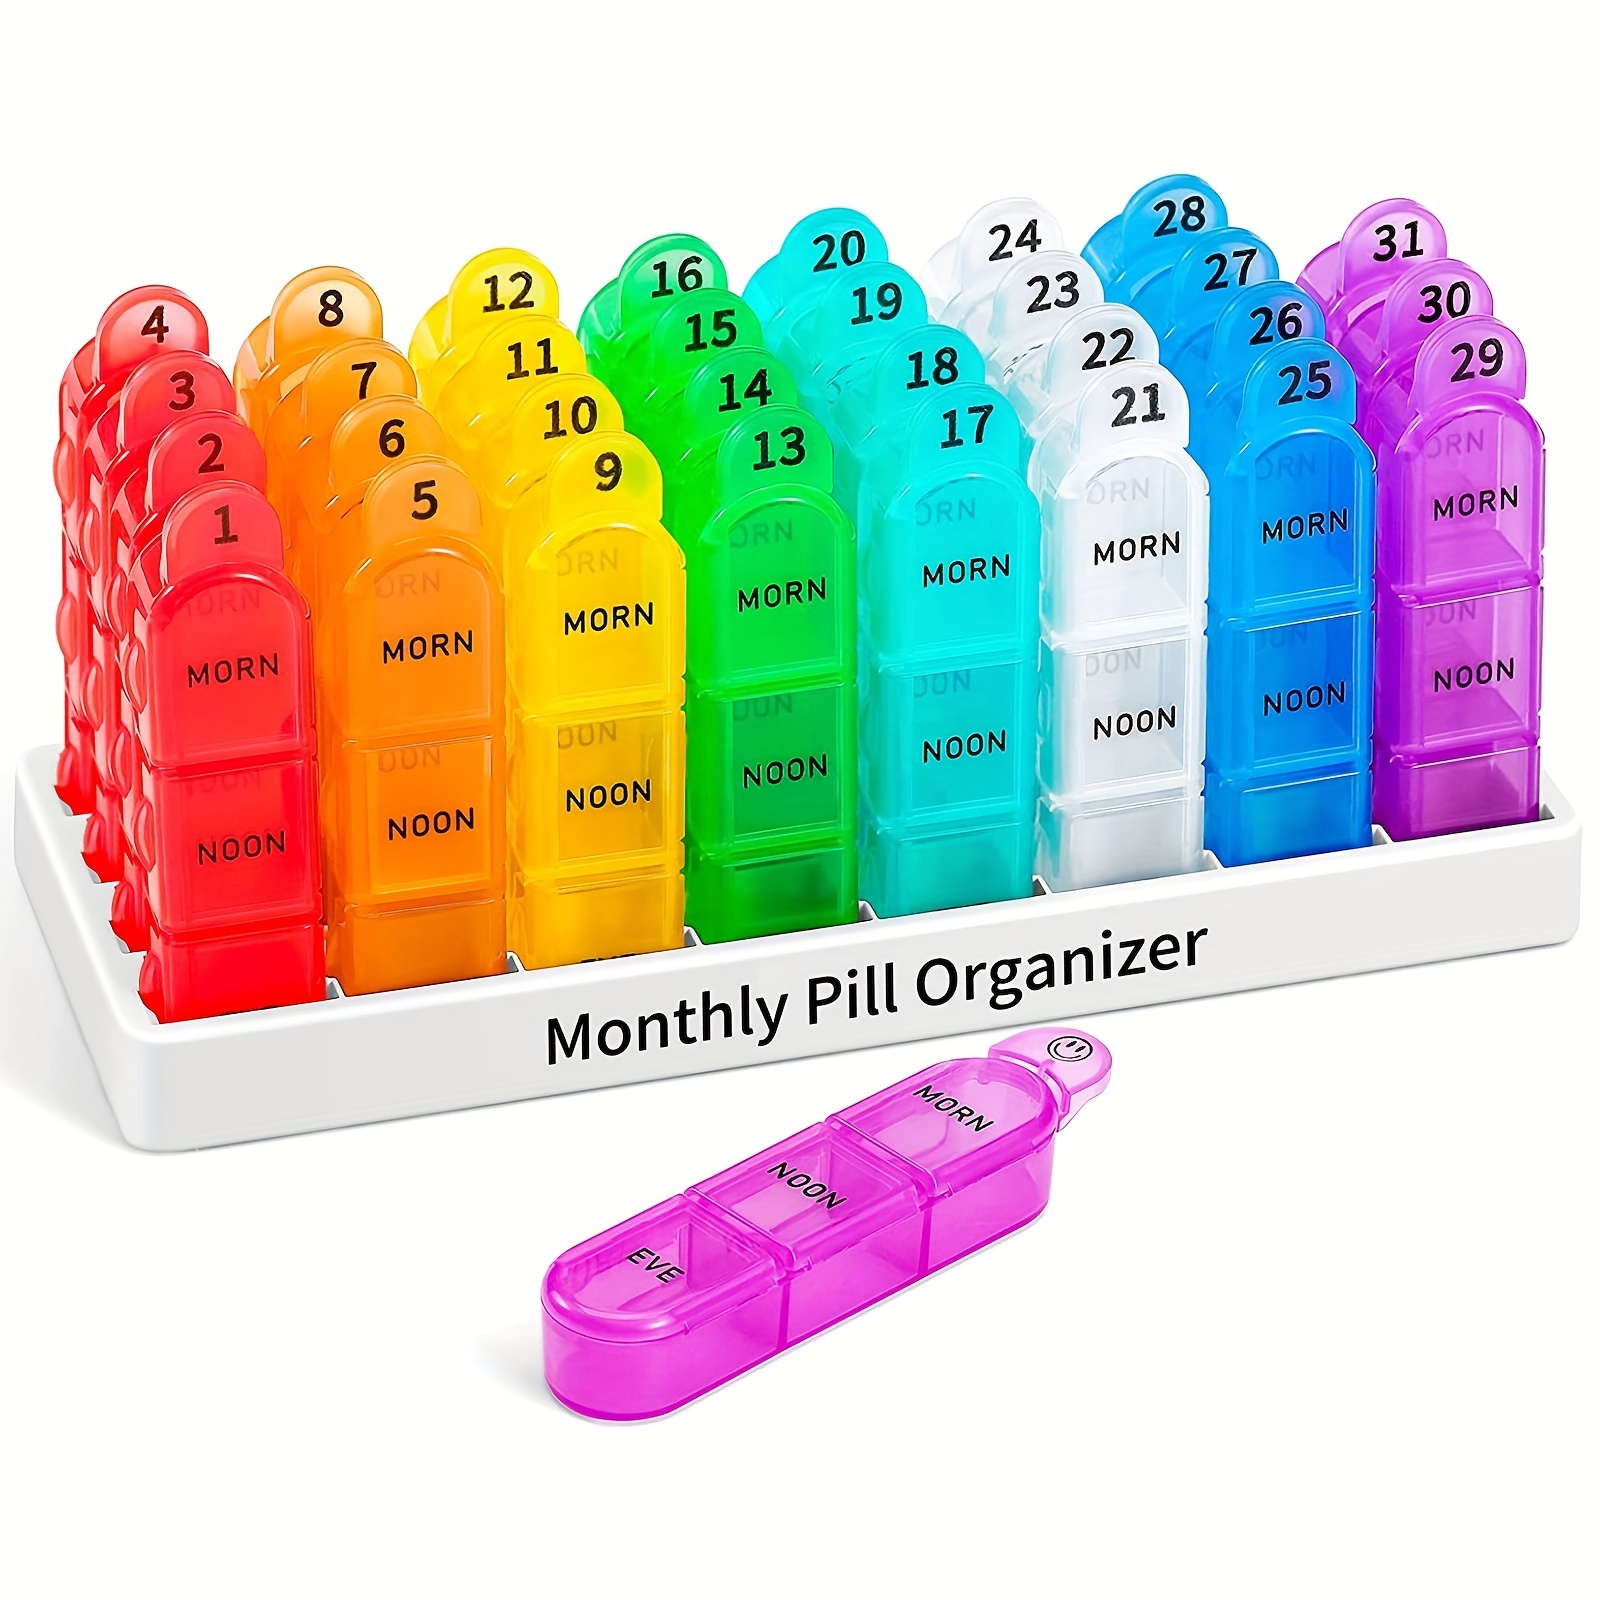 Organizador mensual grande de píldoras, organizador de medicamentos de 28  días, almacenamiento por semana, compartimentos extra grandes a prueba de